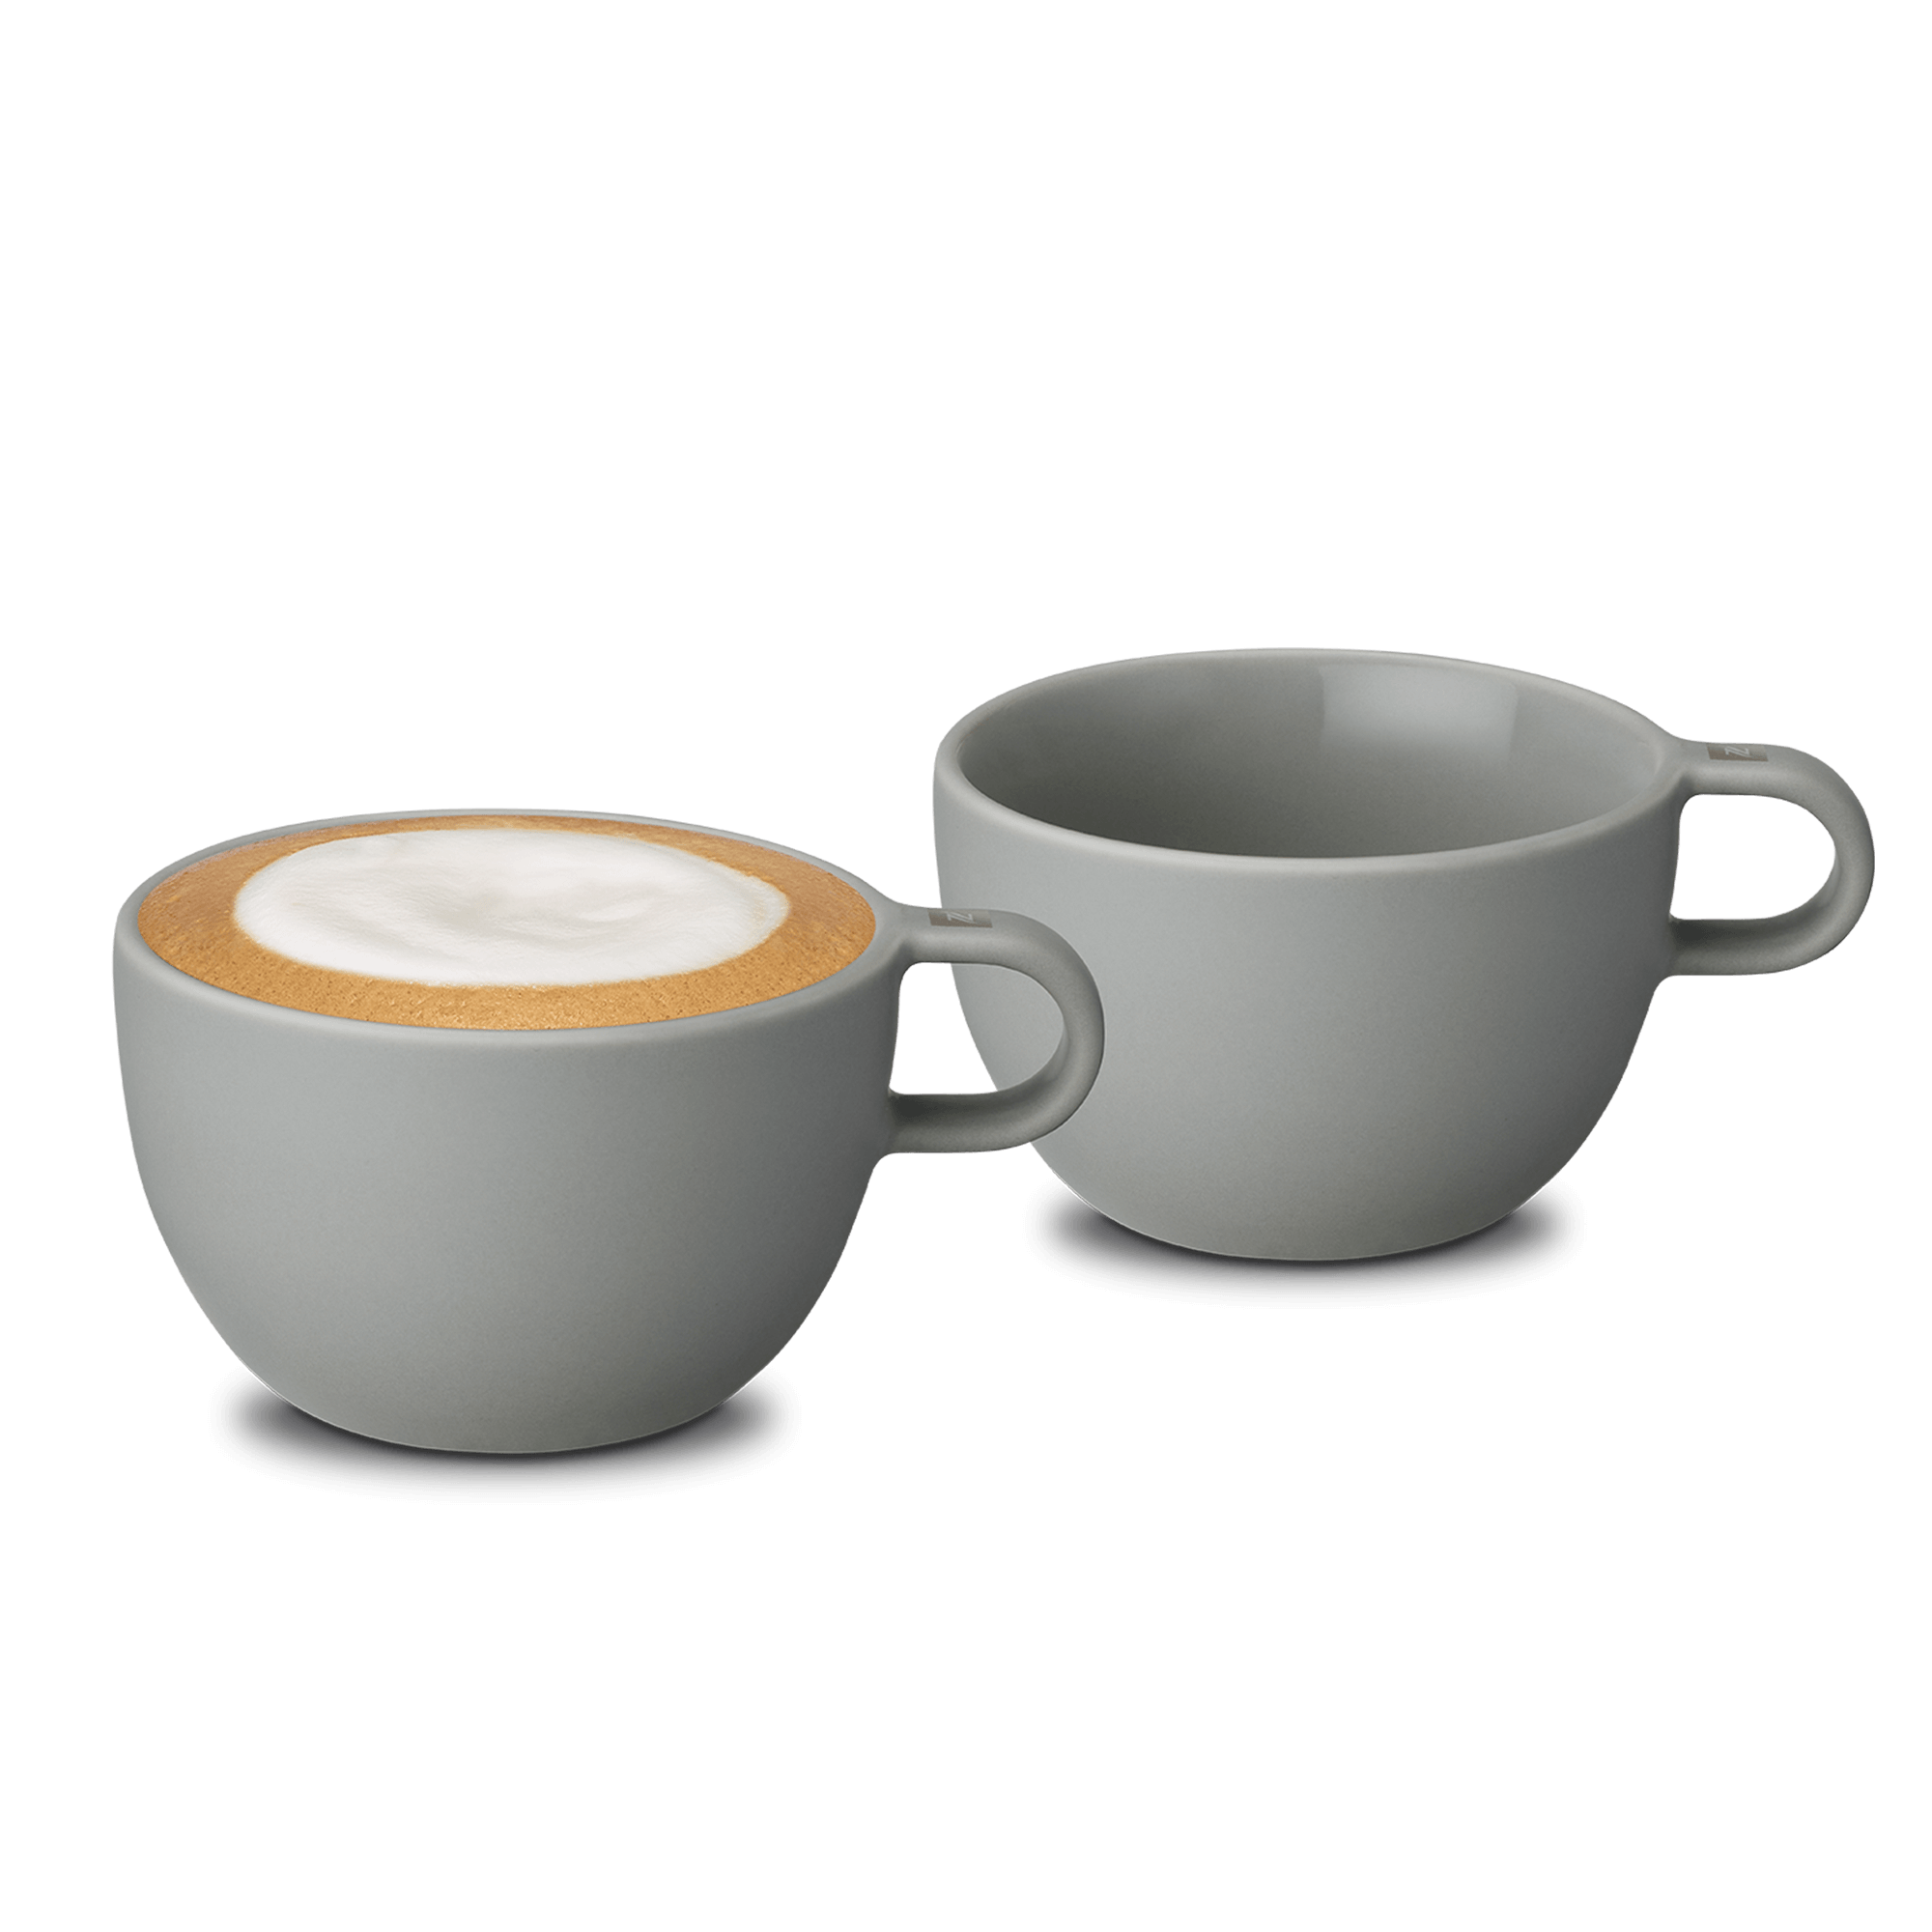 Vervreemding Shilling vermogen Barista Cappuccino Coffee Cup Medium | Nespresso USA